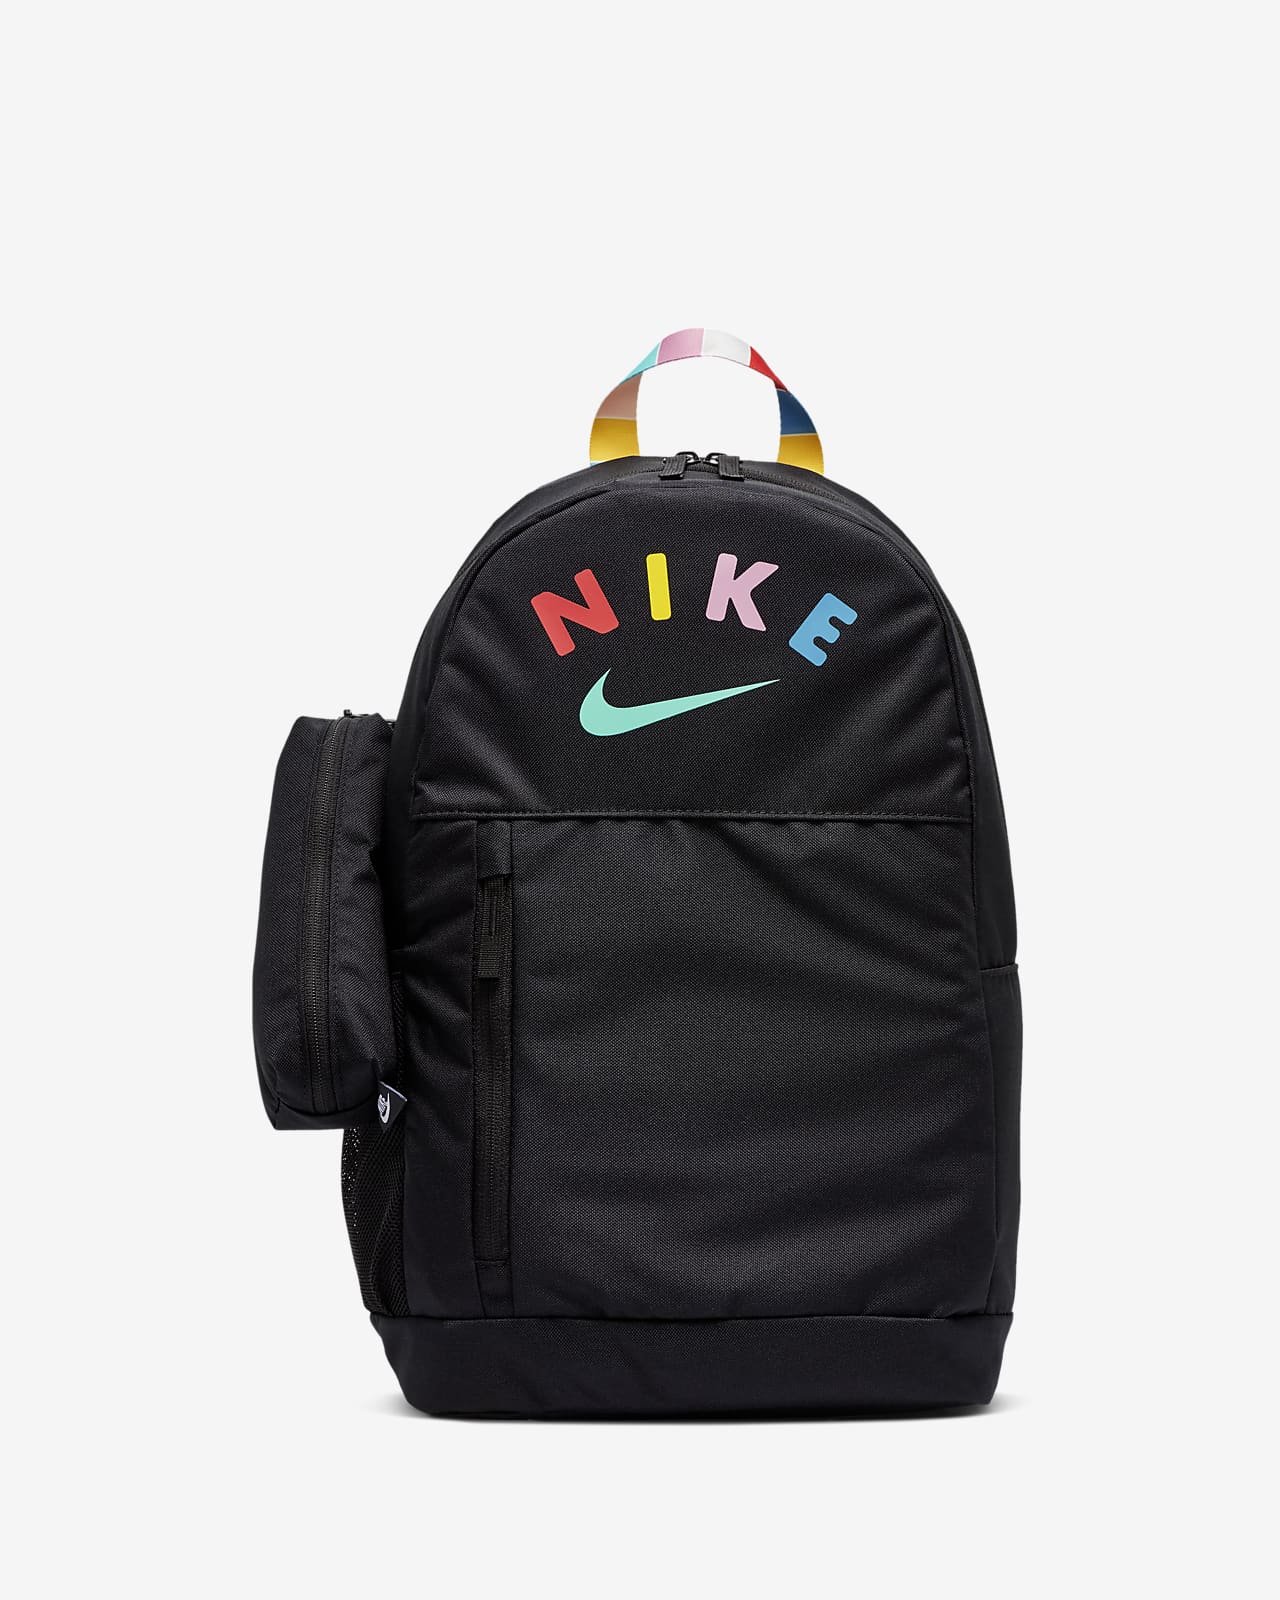 nike elemental backpack review